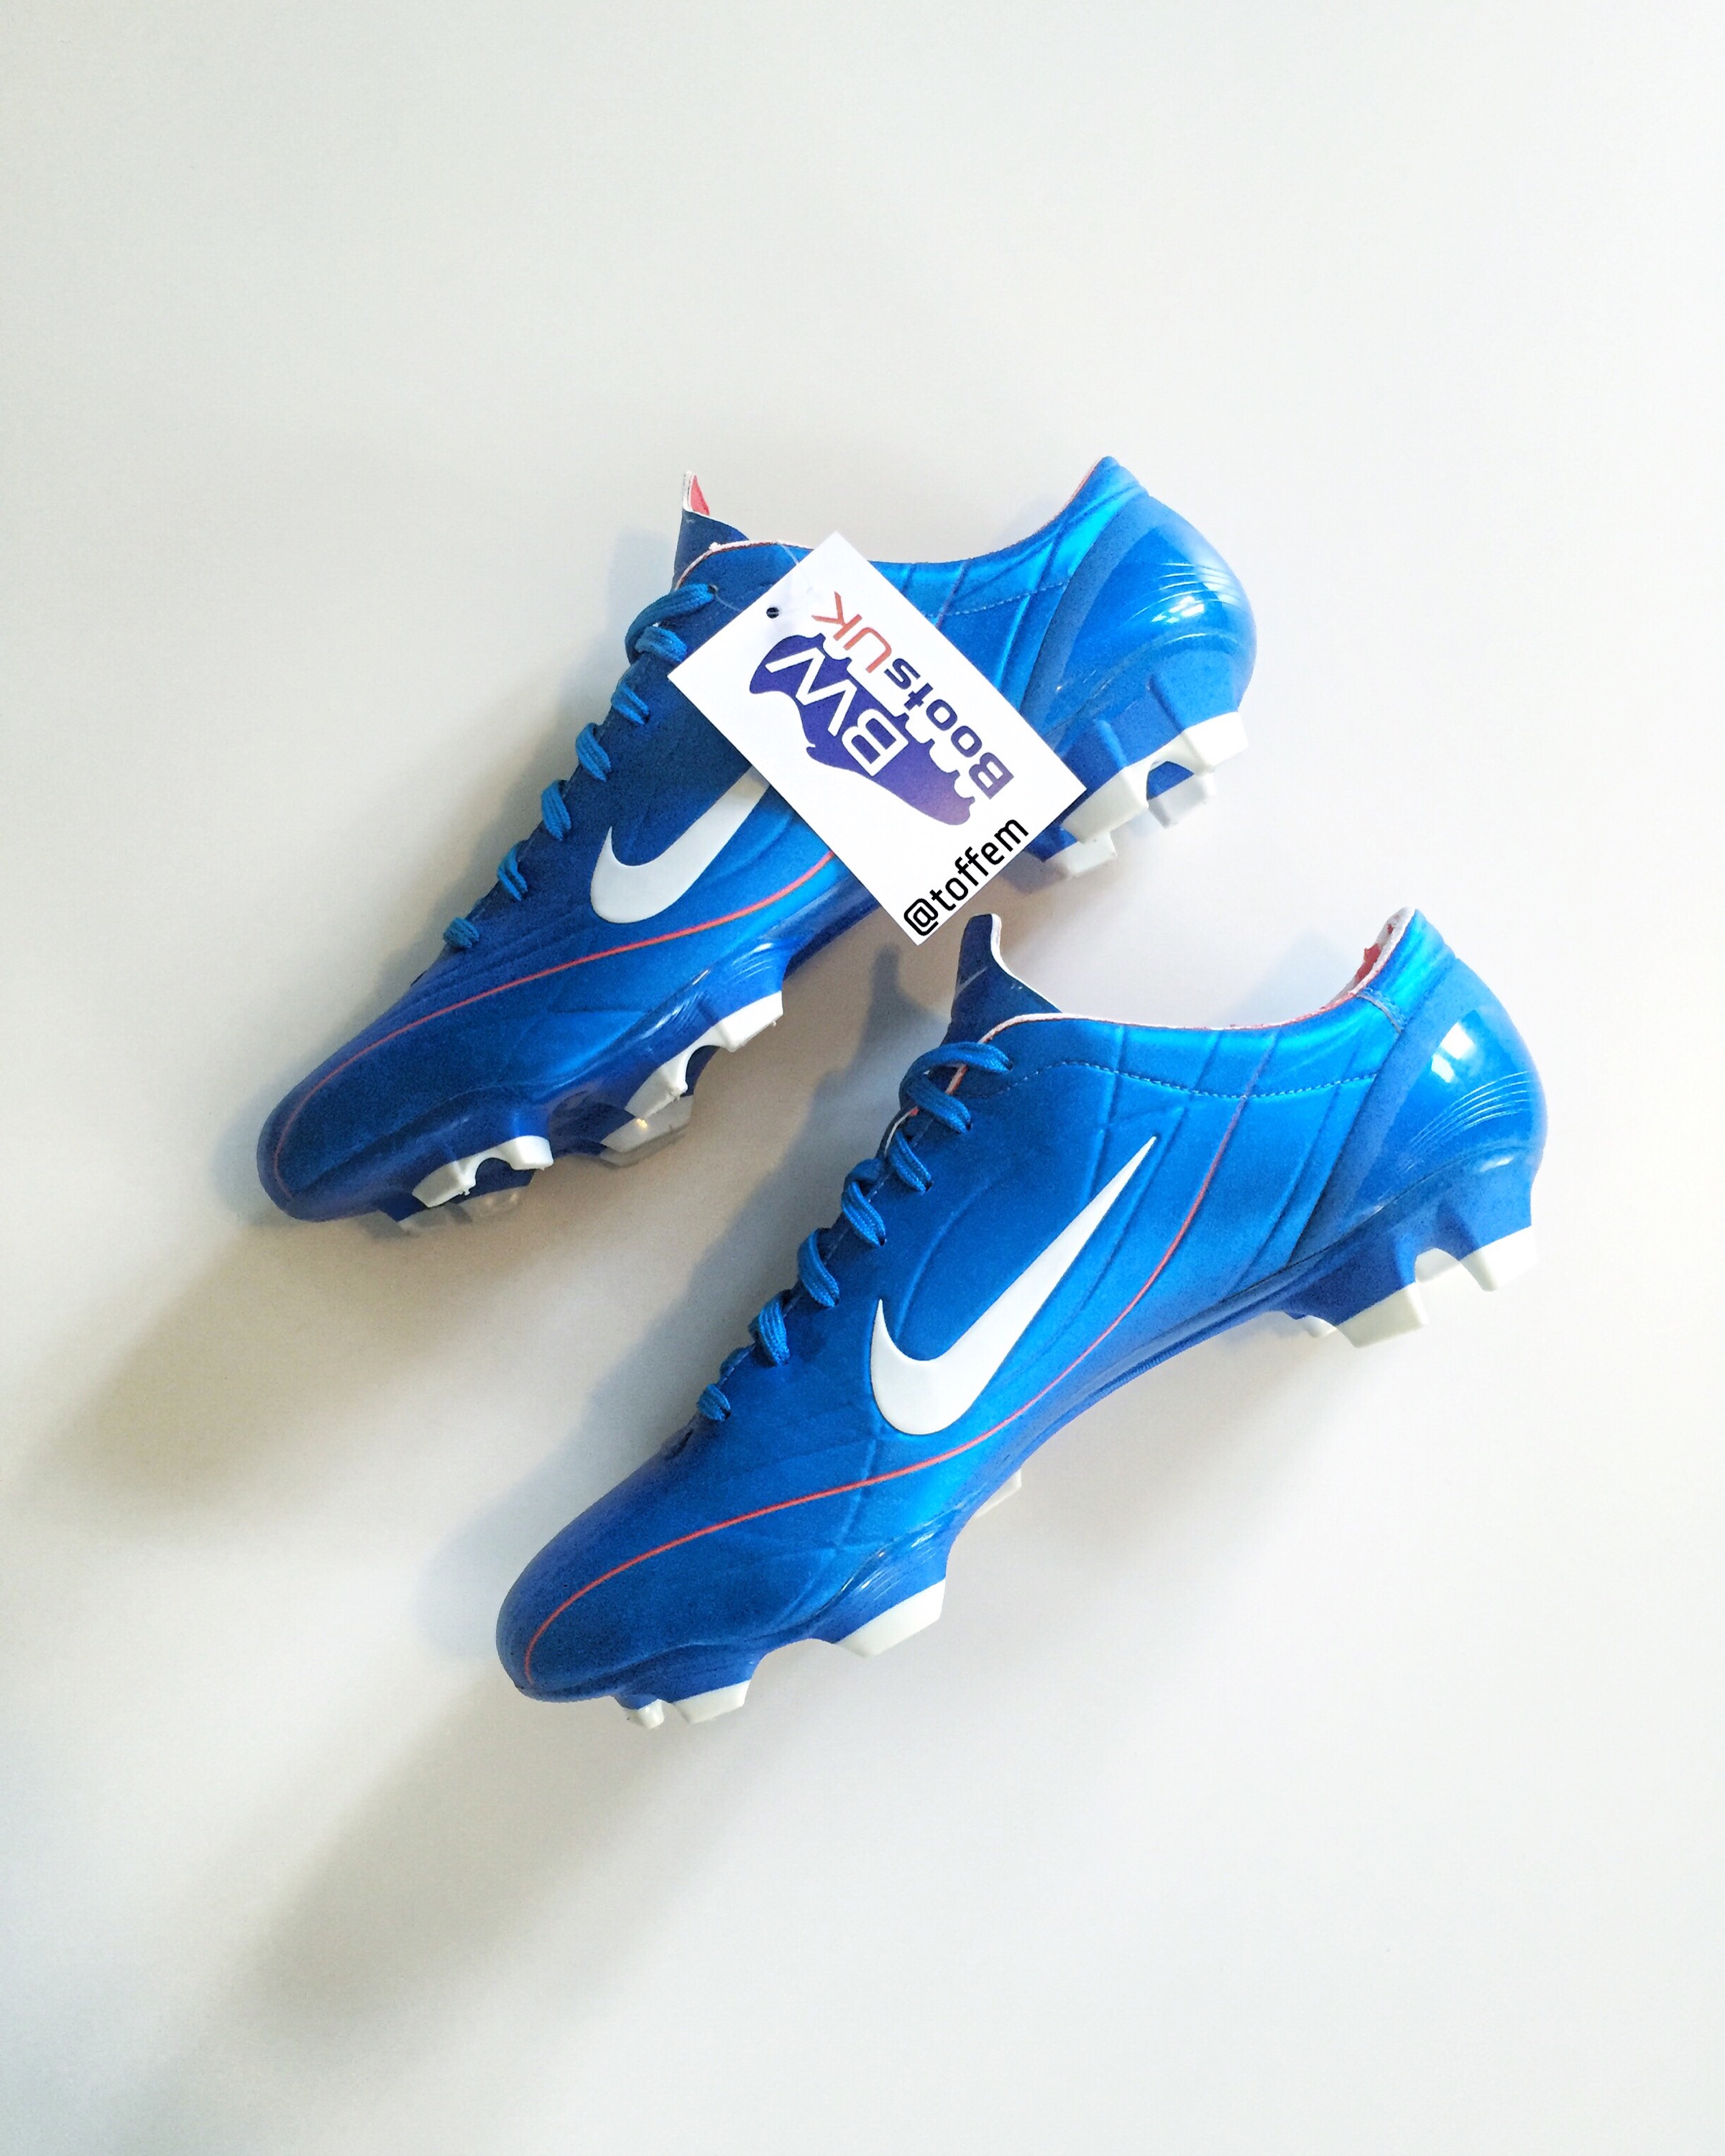 Nike Mercurial Vapor II Fg “Photo blue 